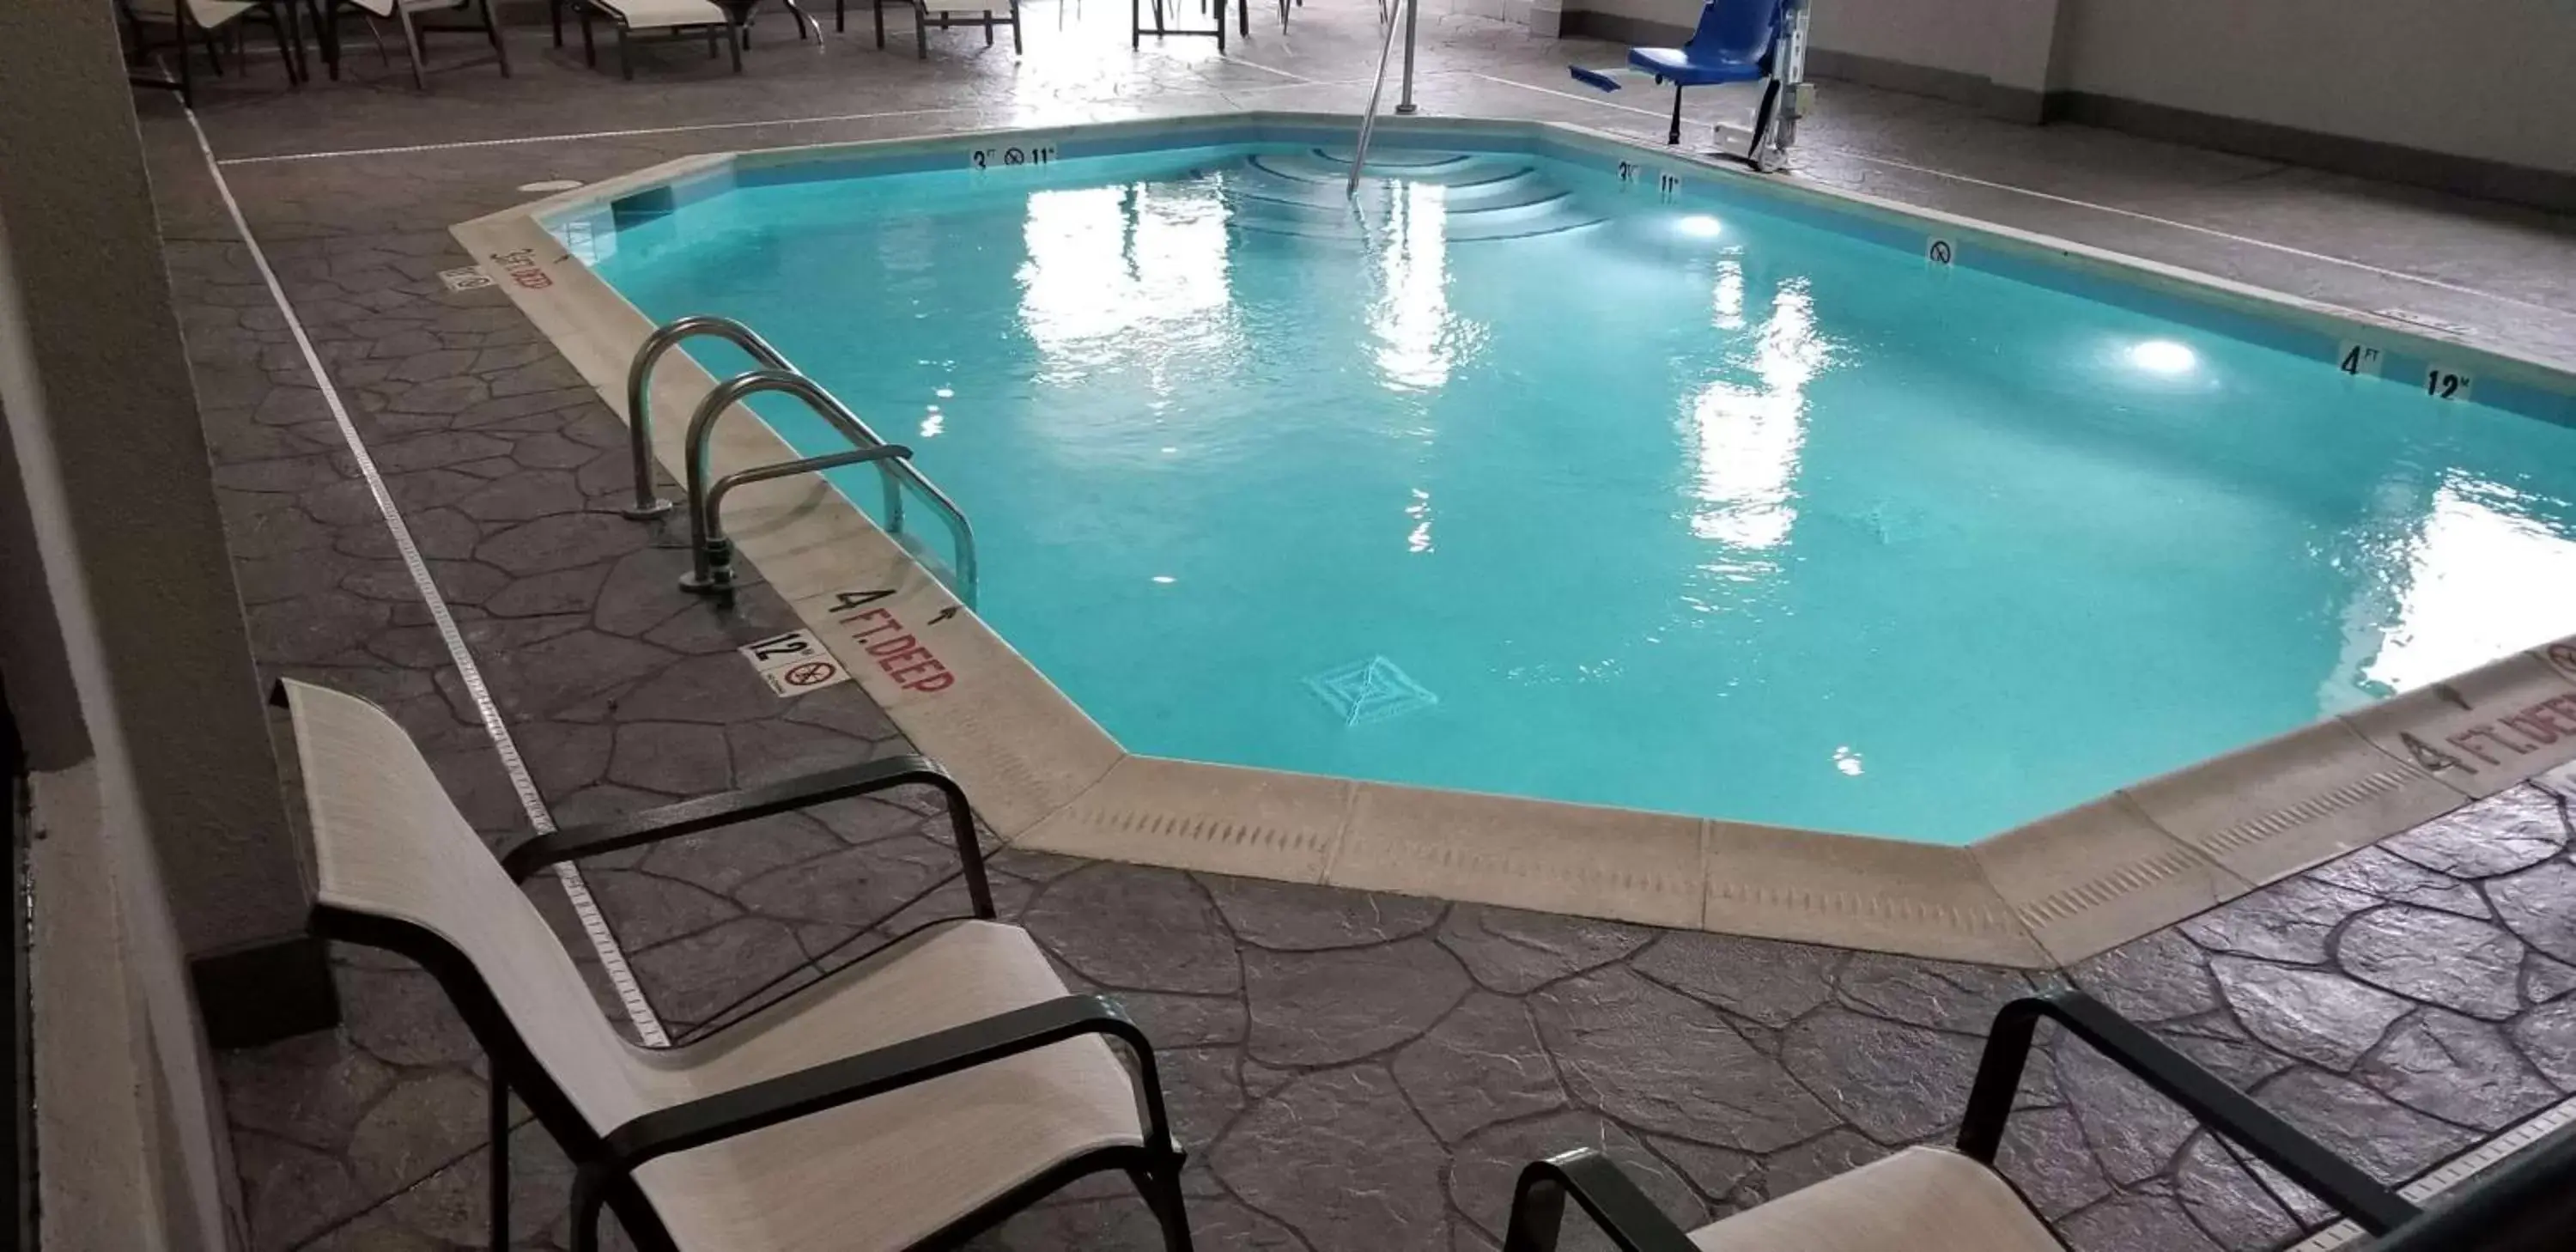 On site, Swimming Pool in Best Western Lexington Inn